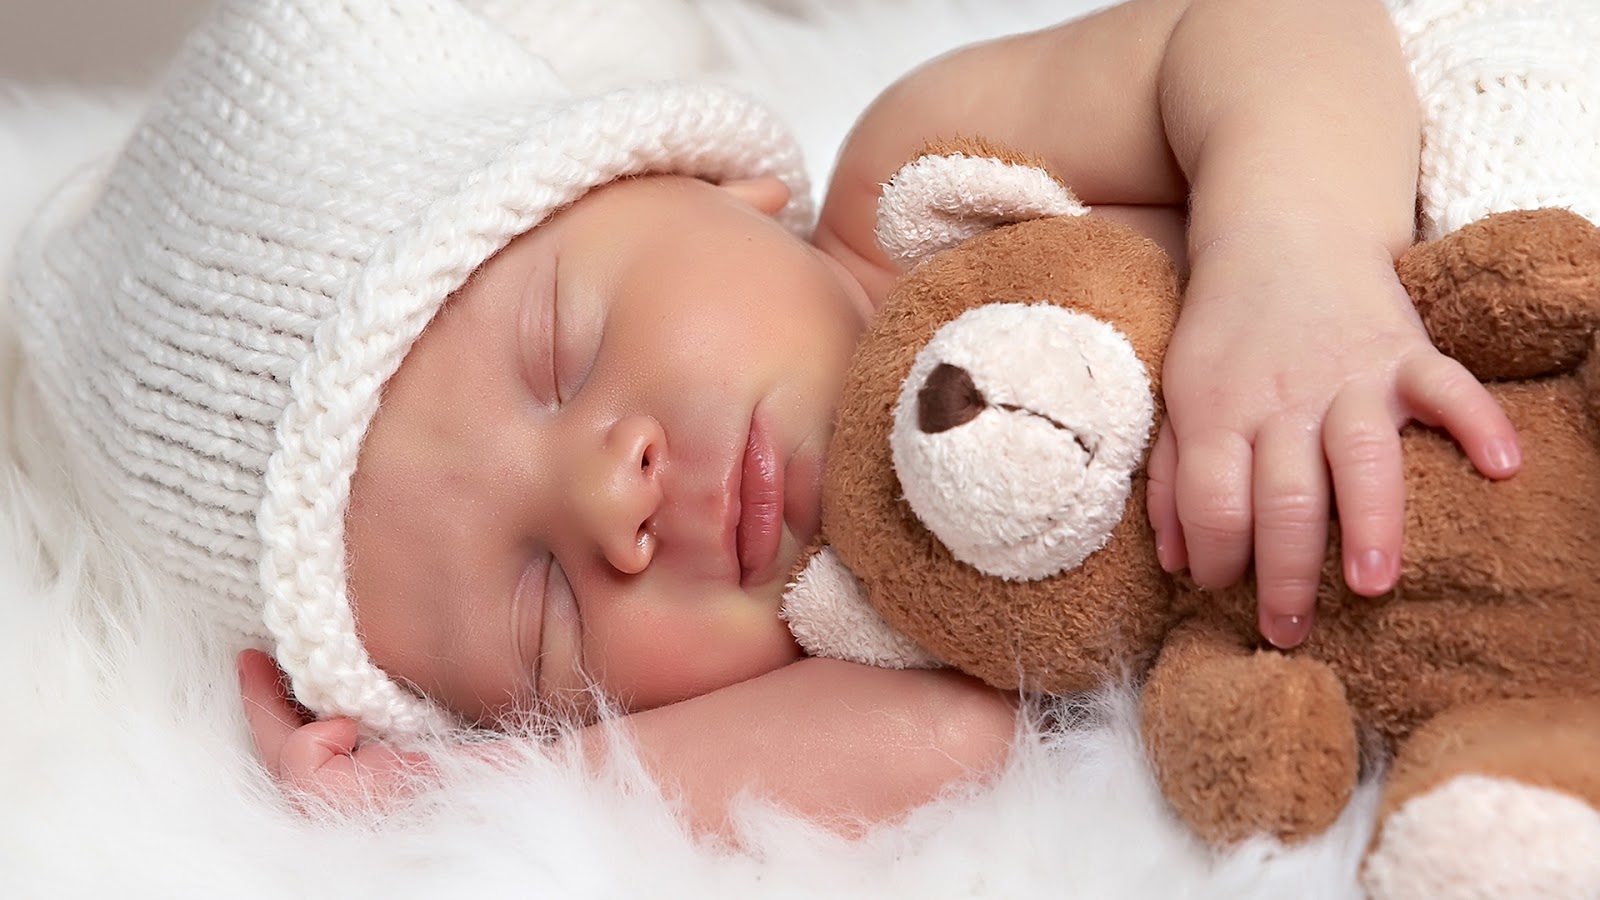 Baby hug teddy bear and sleep HD image free download - Lullaby sleep consultant